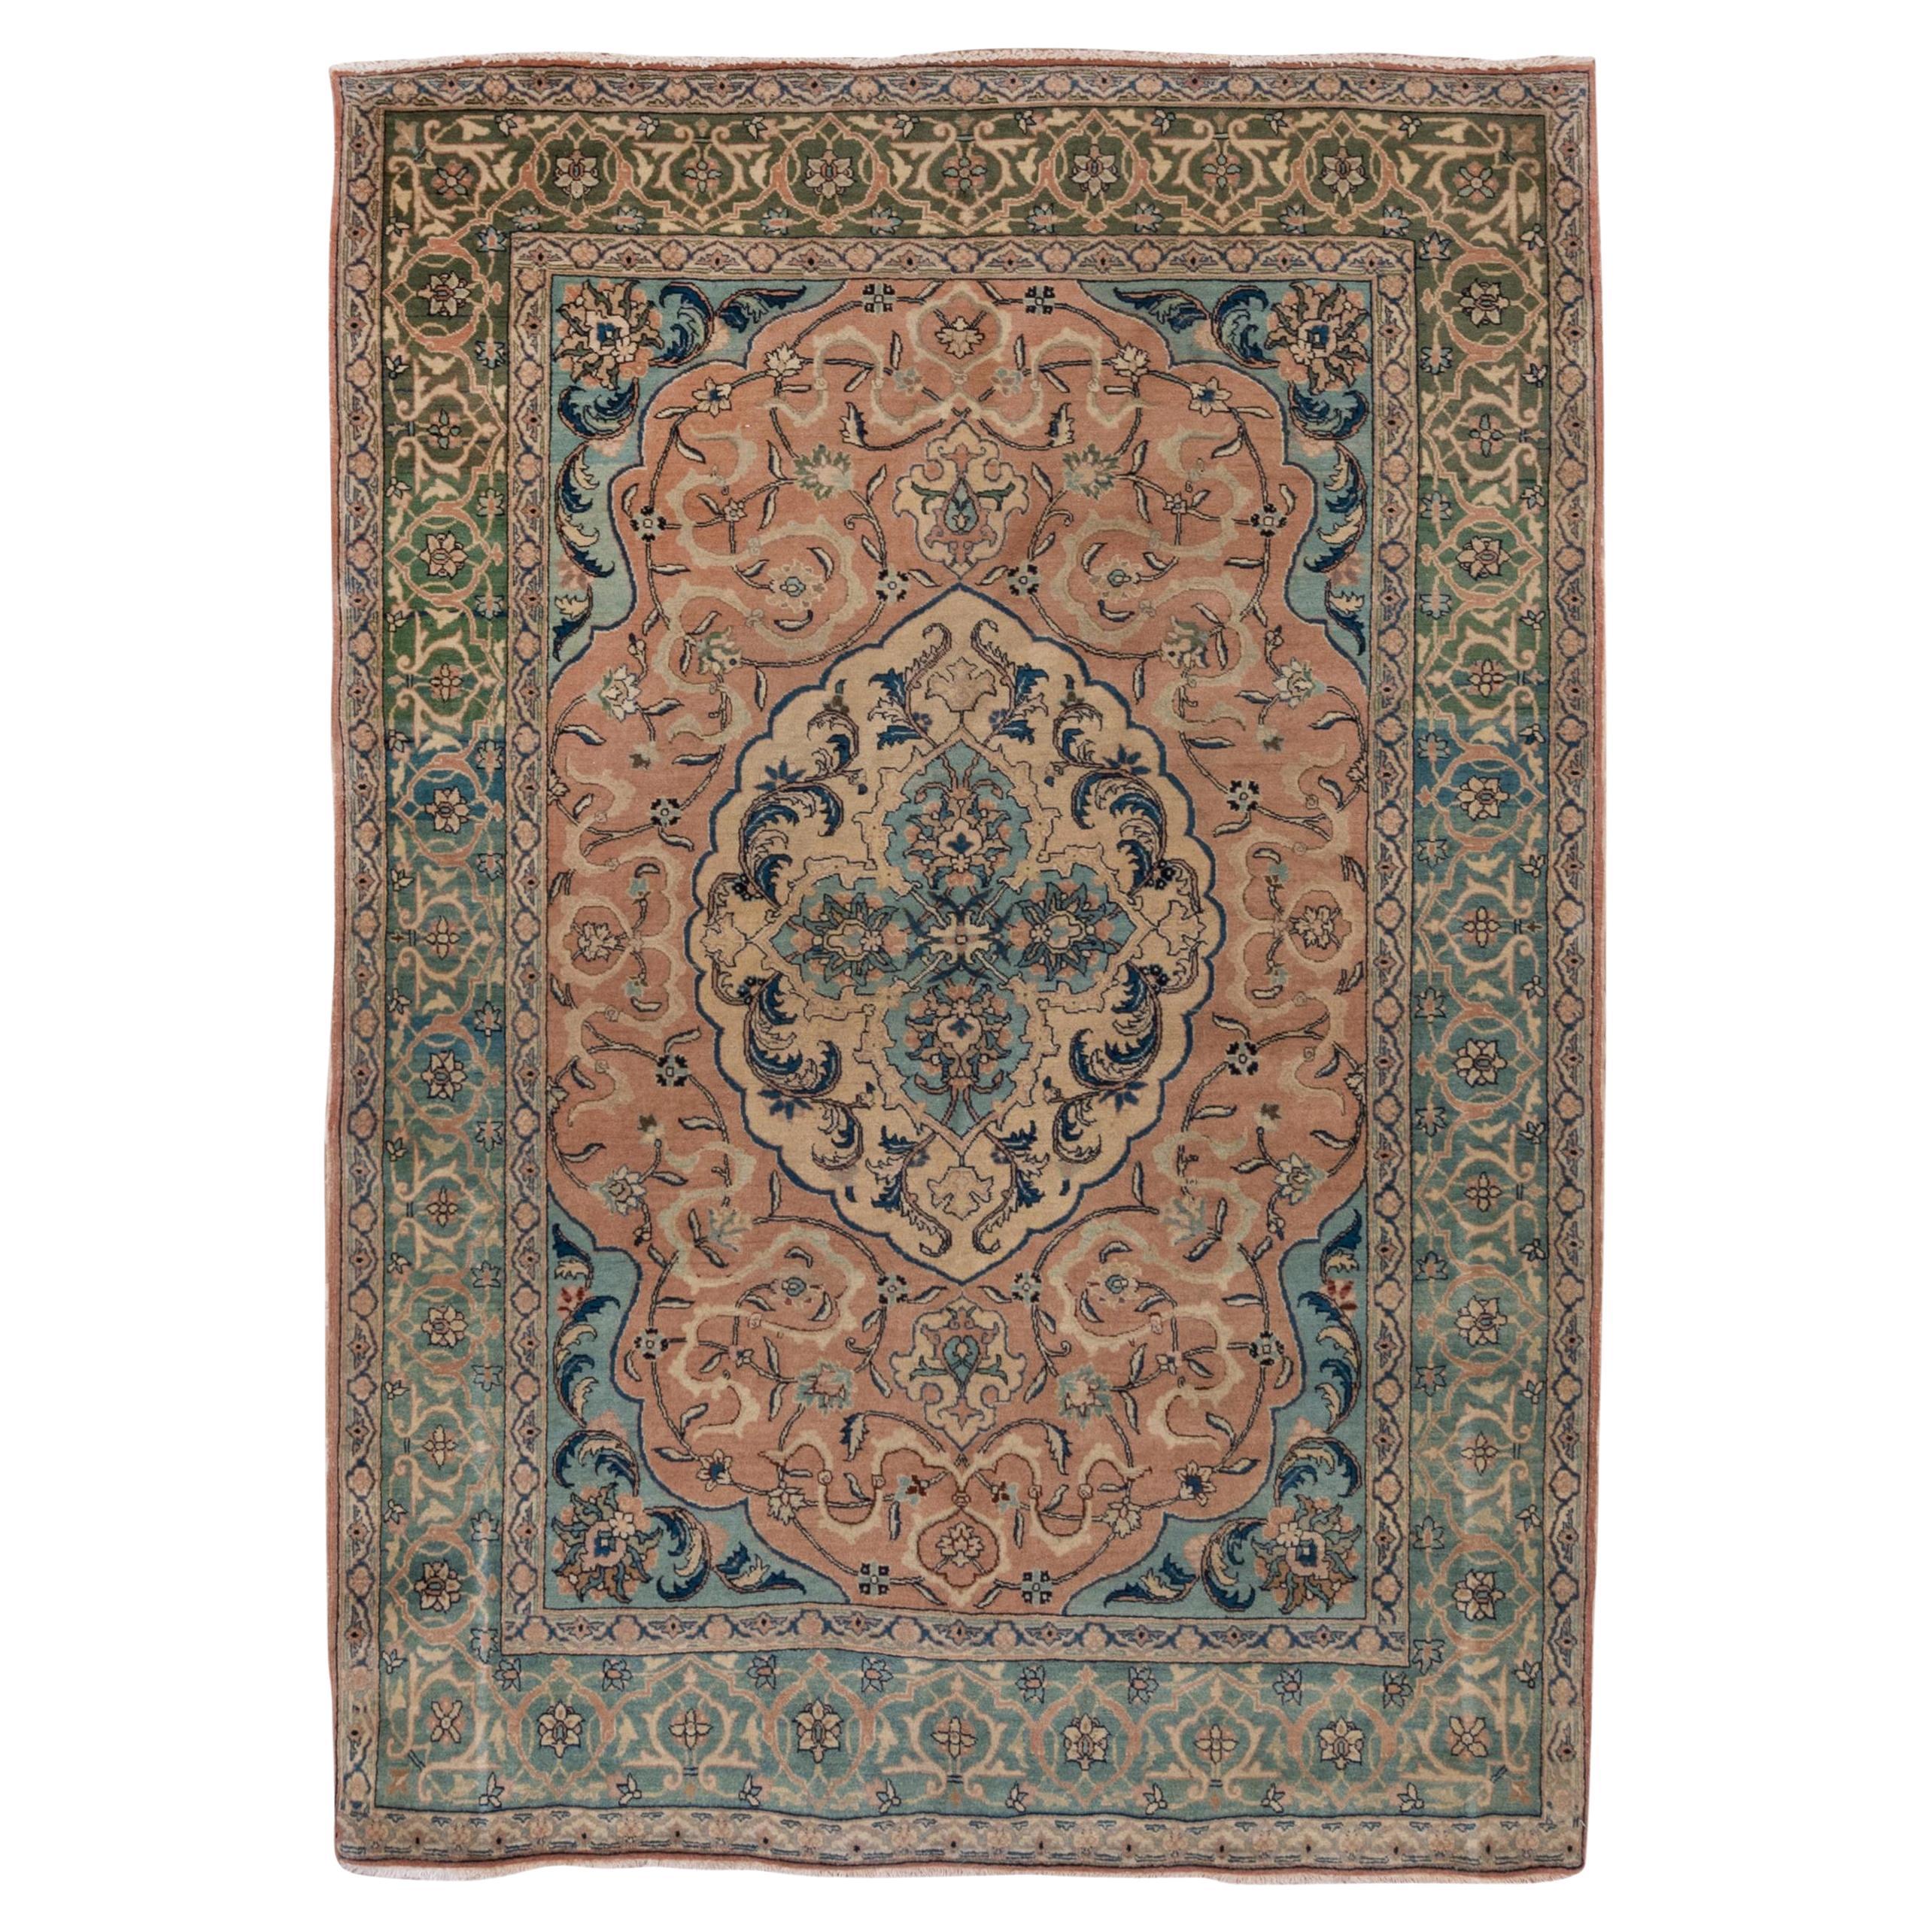 Classic Antique Persian Tabriz Rug, Amazing Colors For Sale